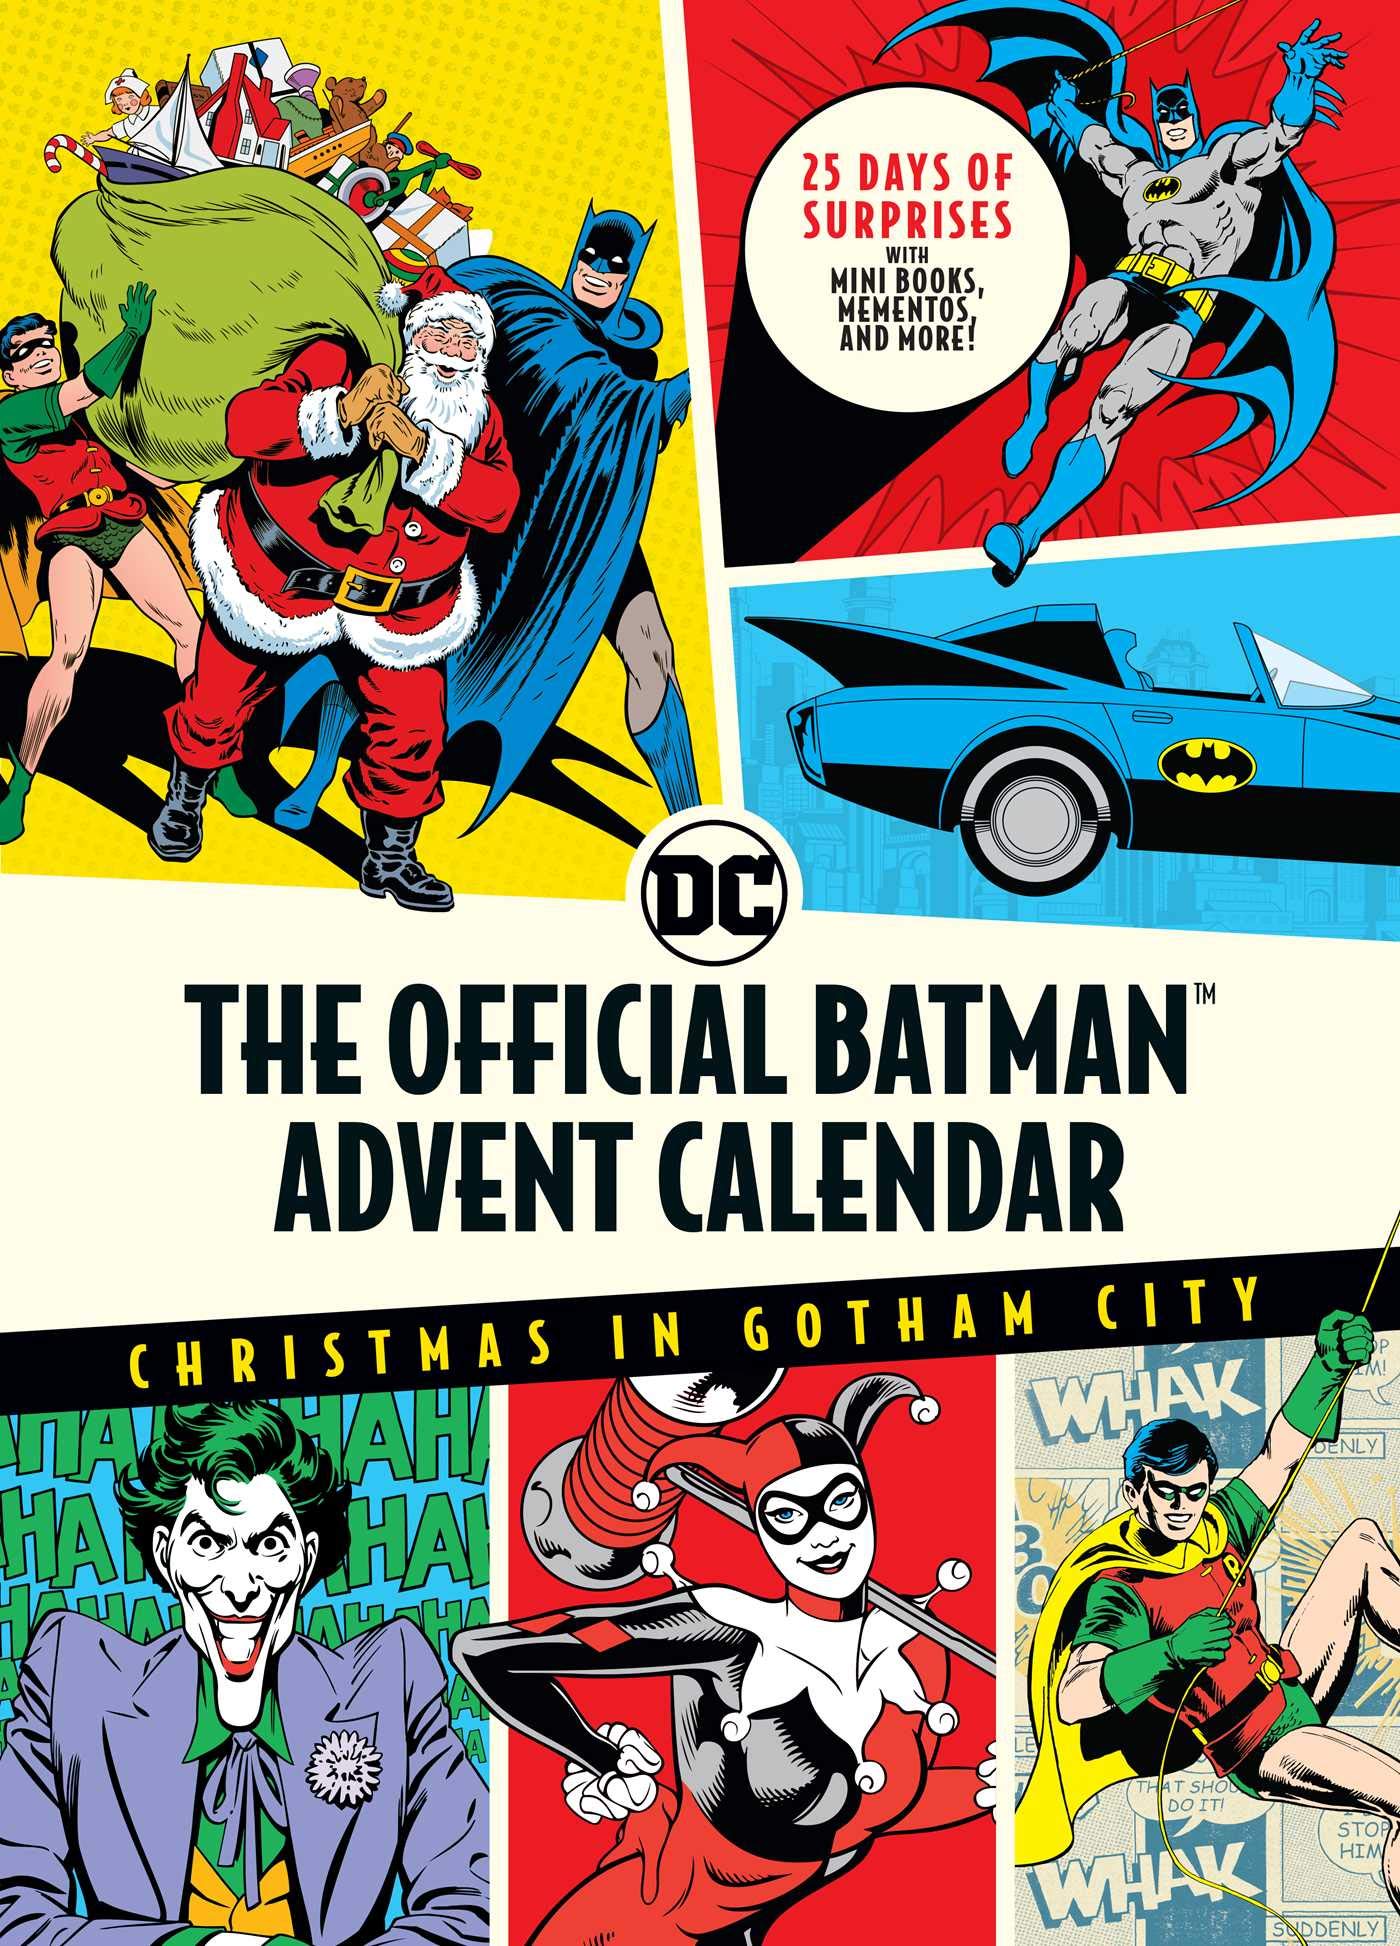 CHRISTMAS IN GOTHAM BATMAN Advent Calendar Coming This Holiday Season